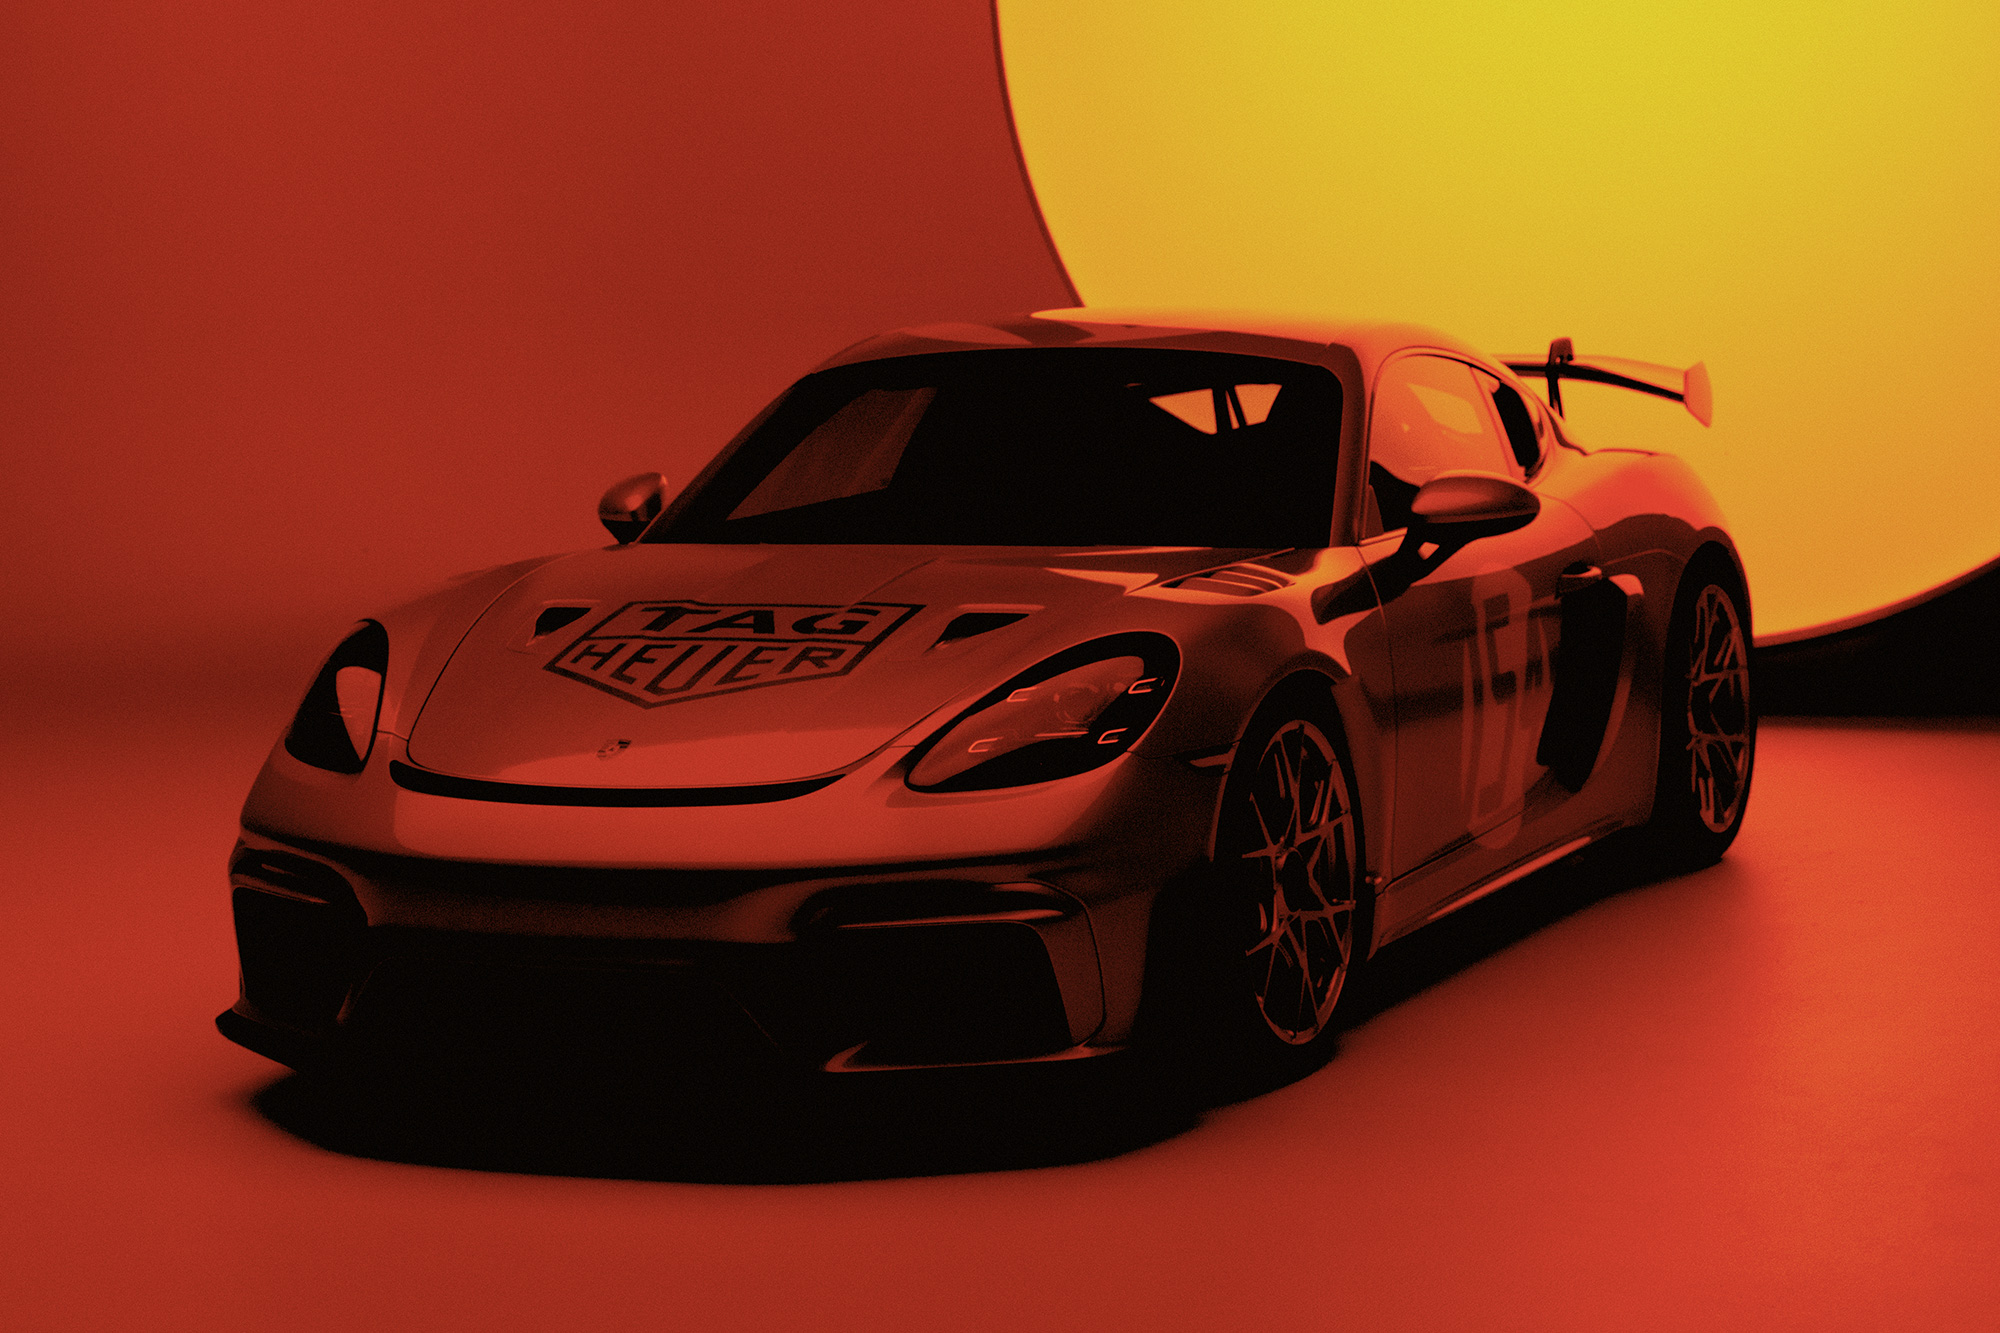 Porsche and TAG Heuer